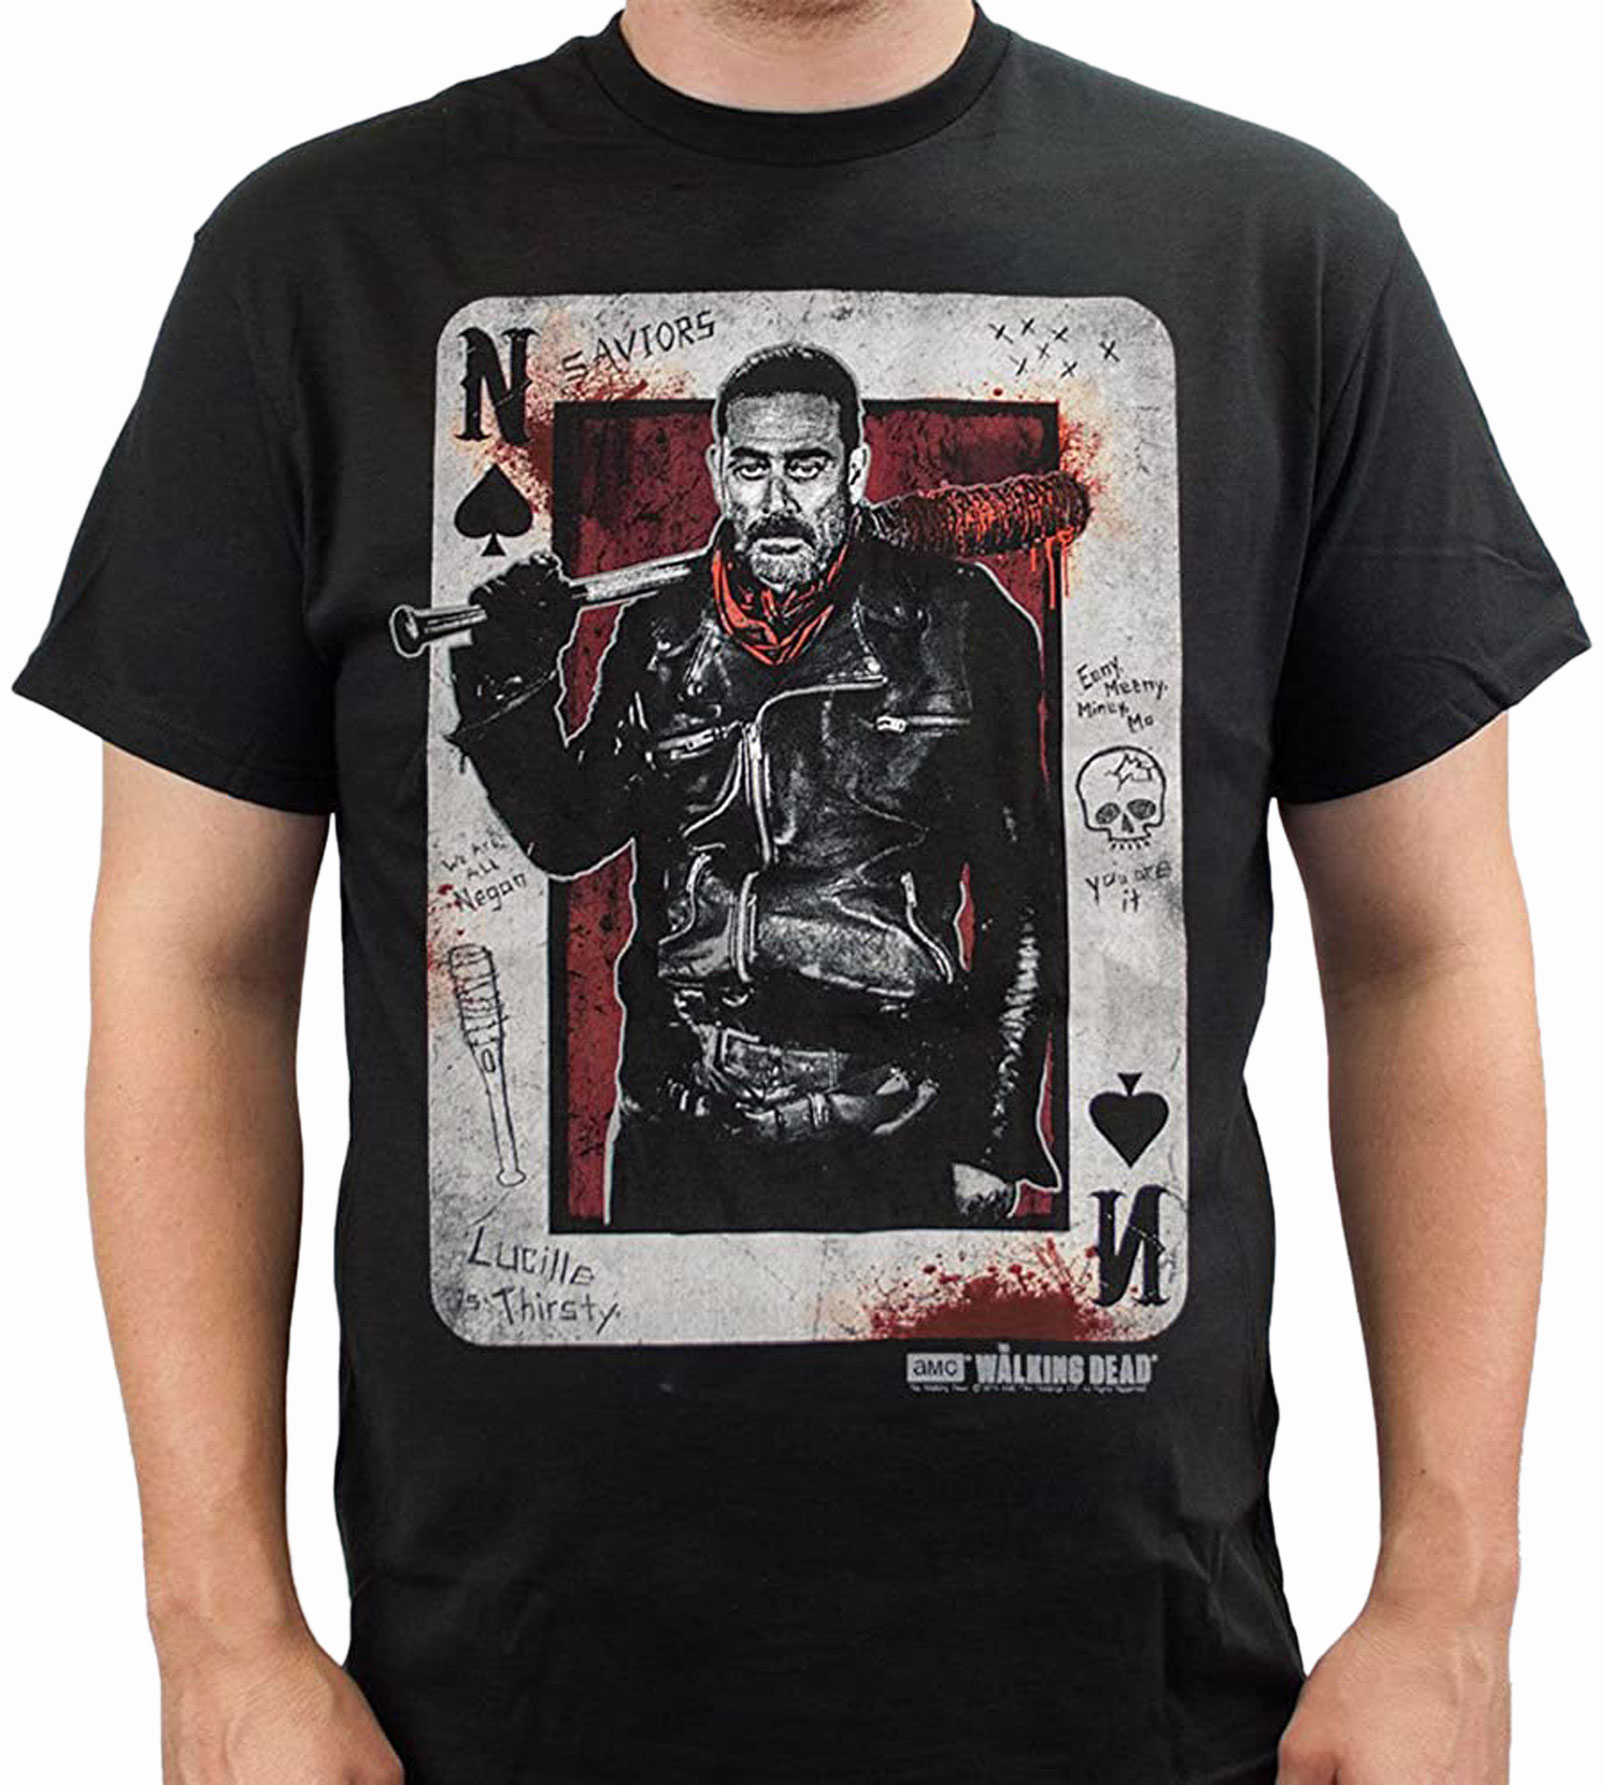 Walking Dead The Negan Playing Card Adult T-Shirt (Small, Black)